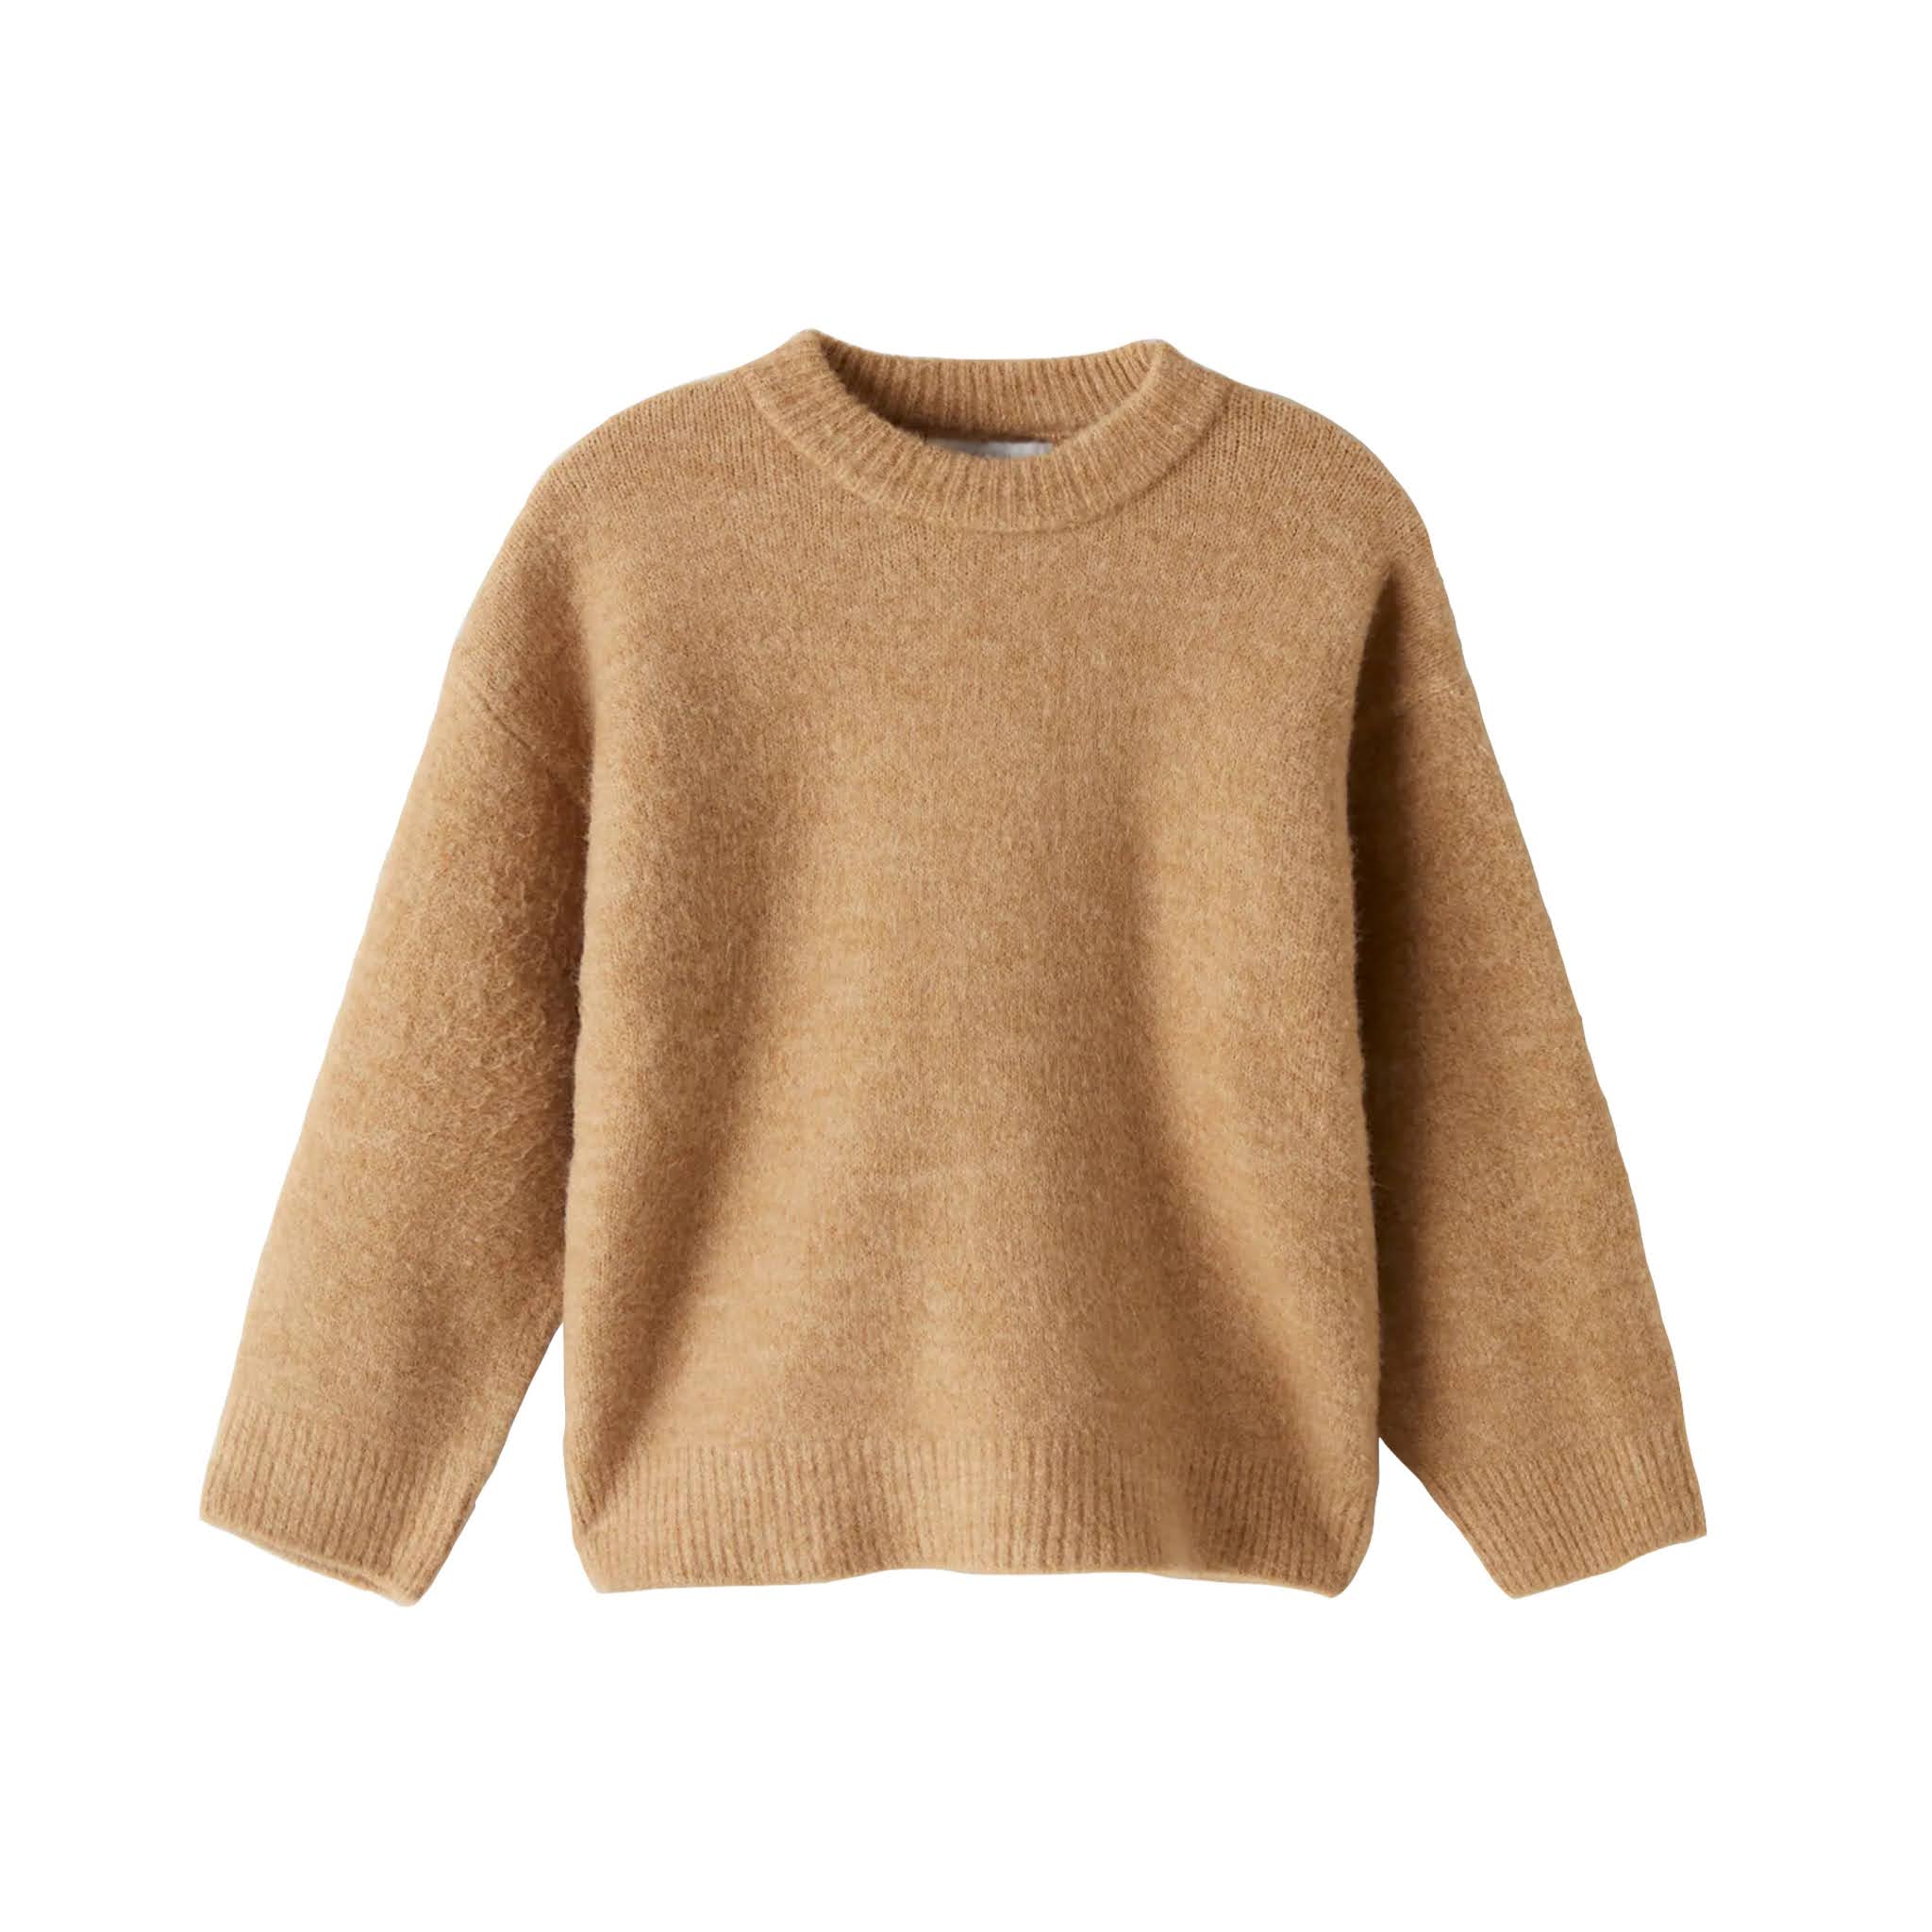 Camel Basic Knit Sweater from Zara Kids